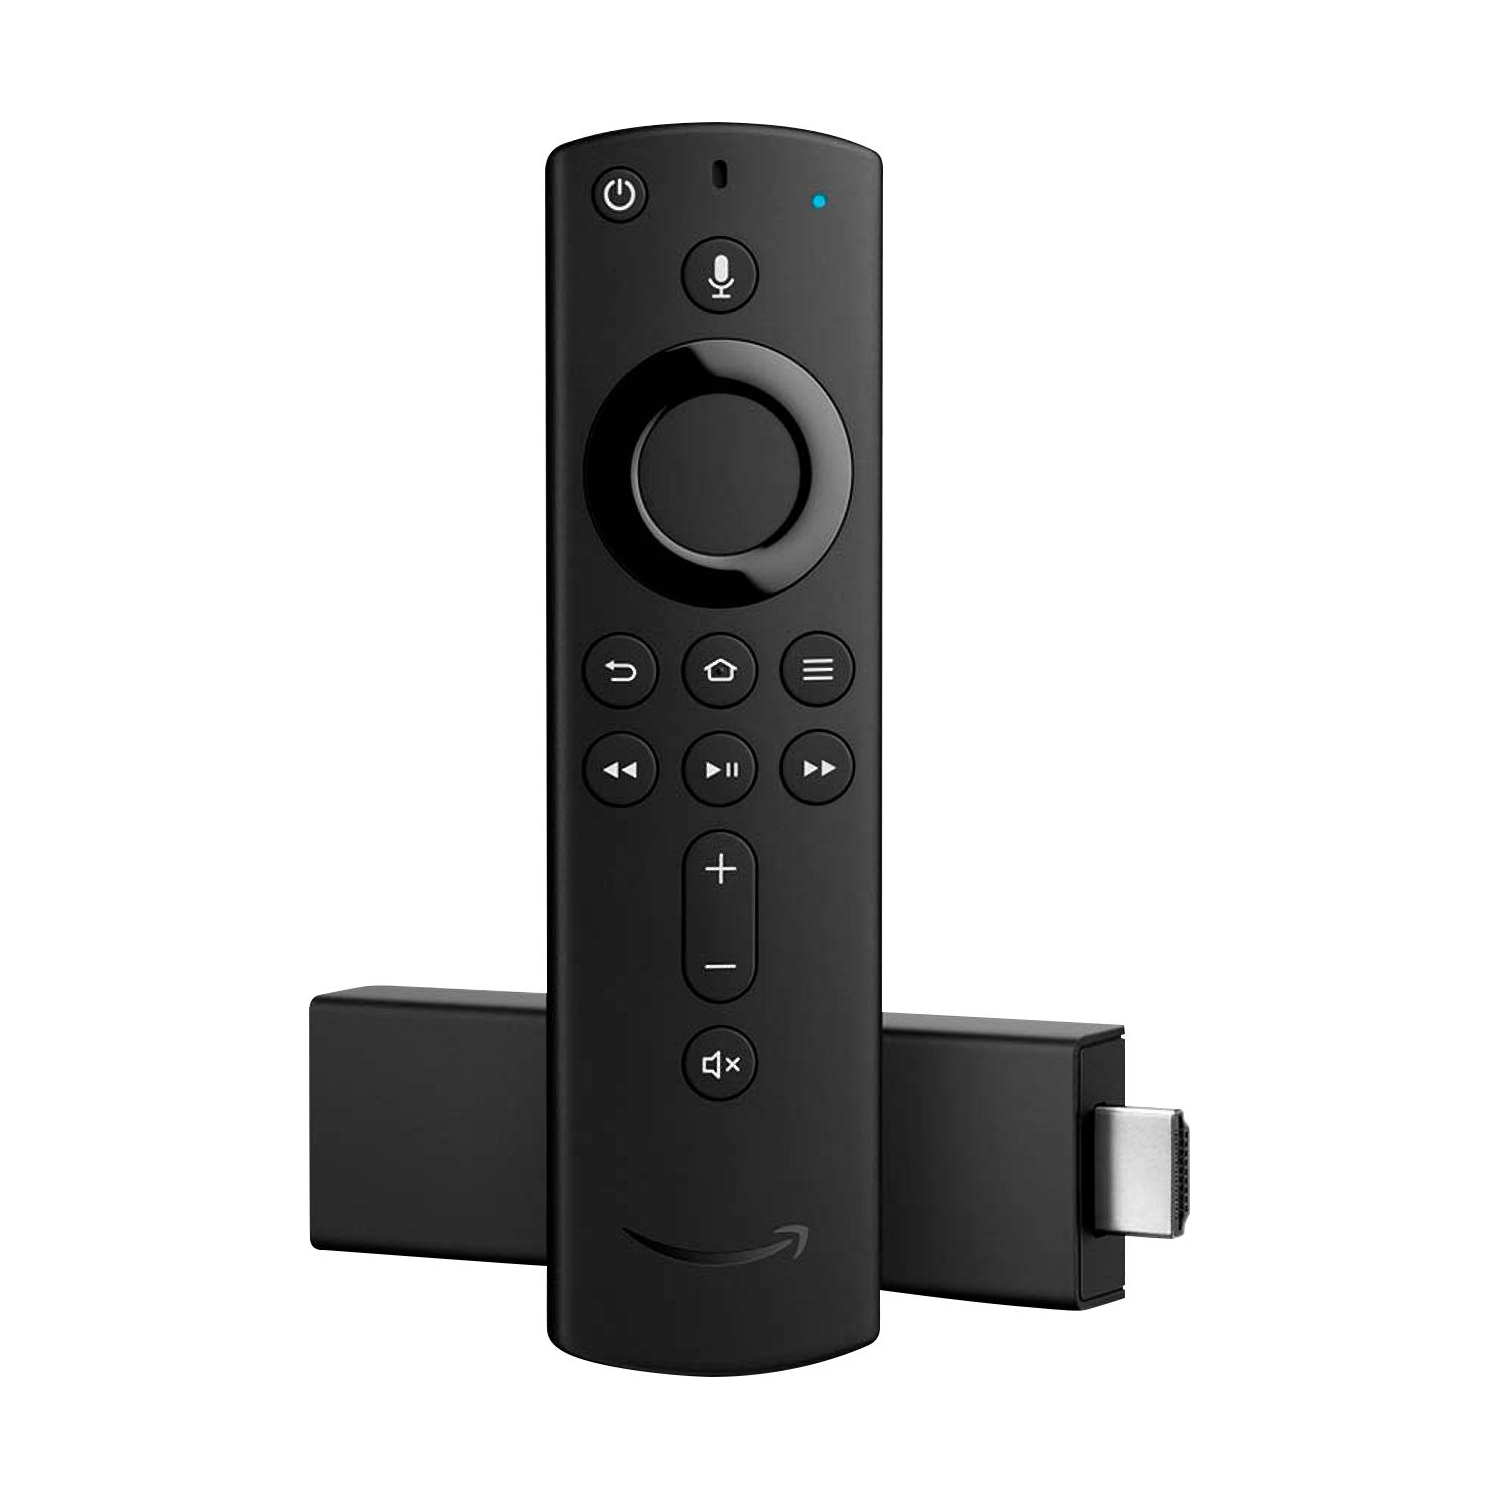 Amazon Fire TV Stick 4K Media Streamer with Alexa Voice Remote - Black - Brand New